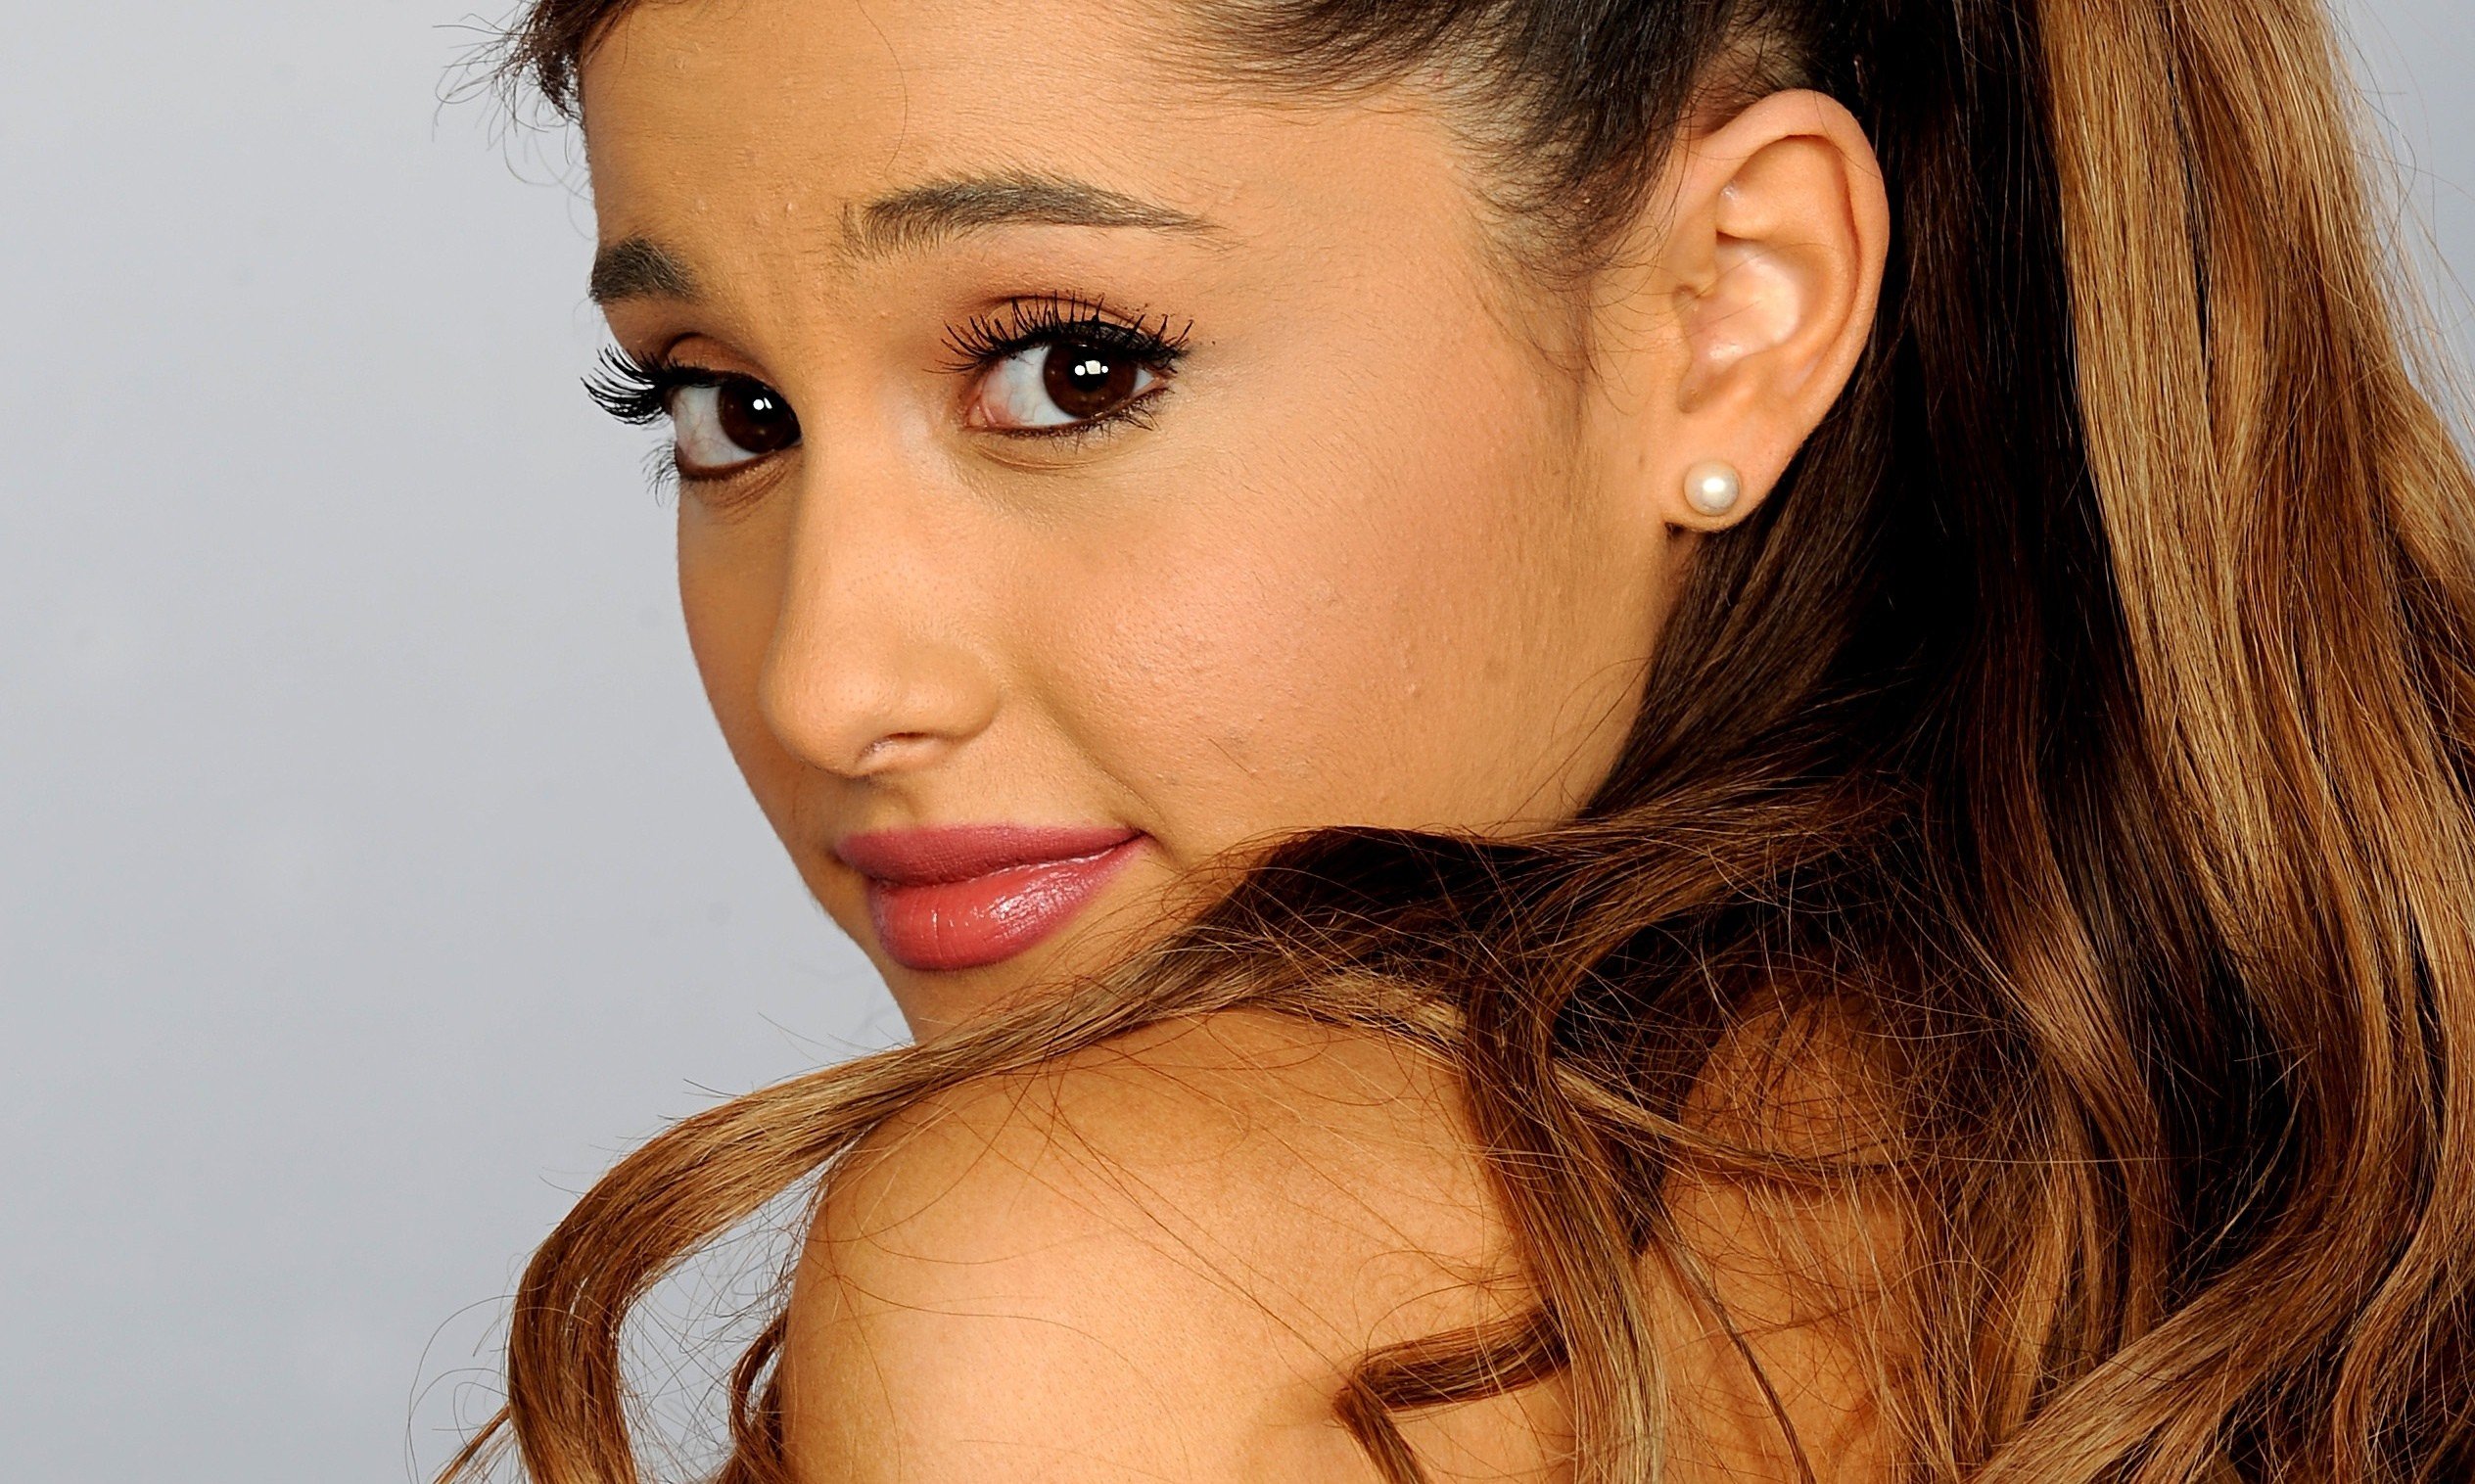 Ariana Grande Singer Pop R B Babe Actress Wallpapers Hd Desktop